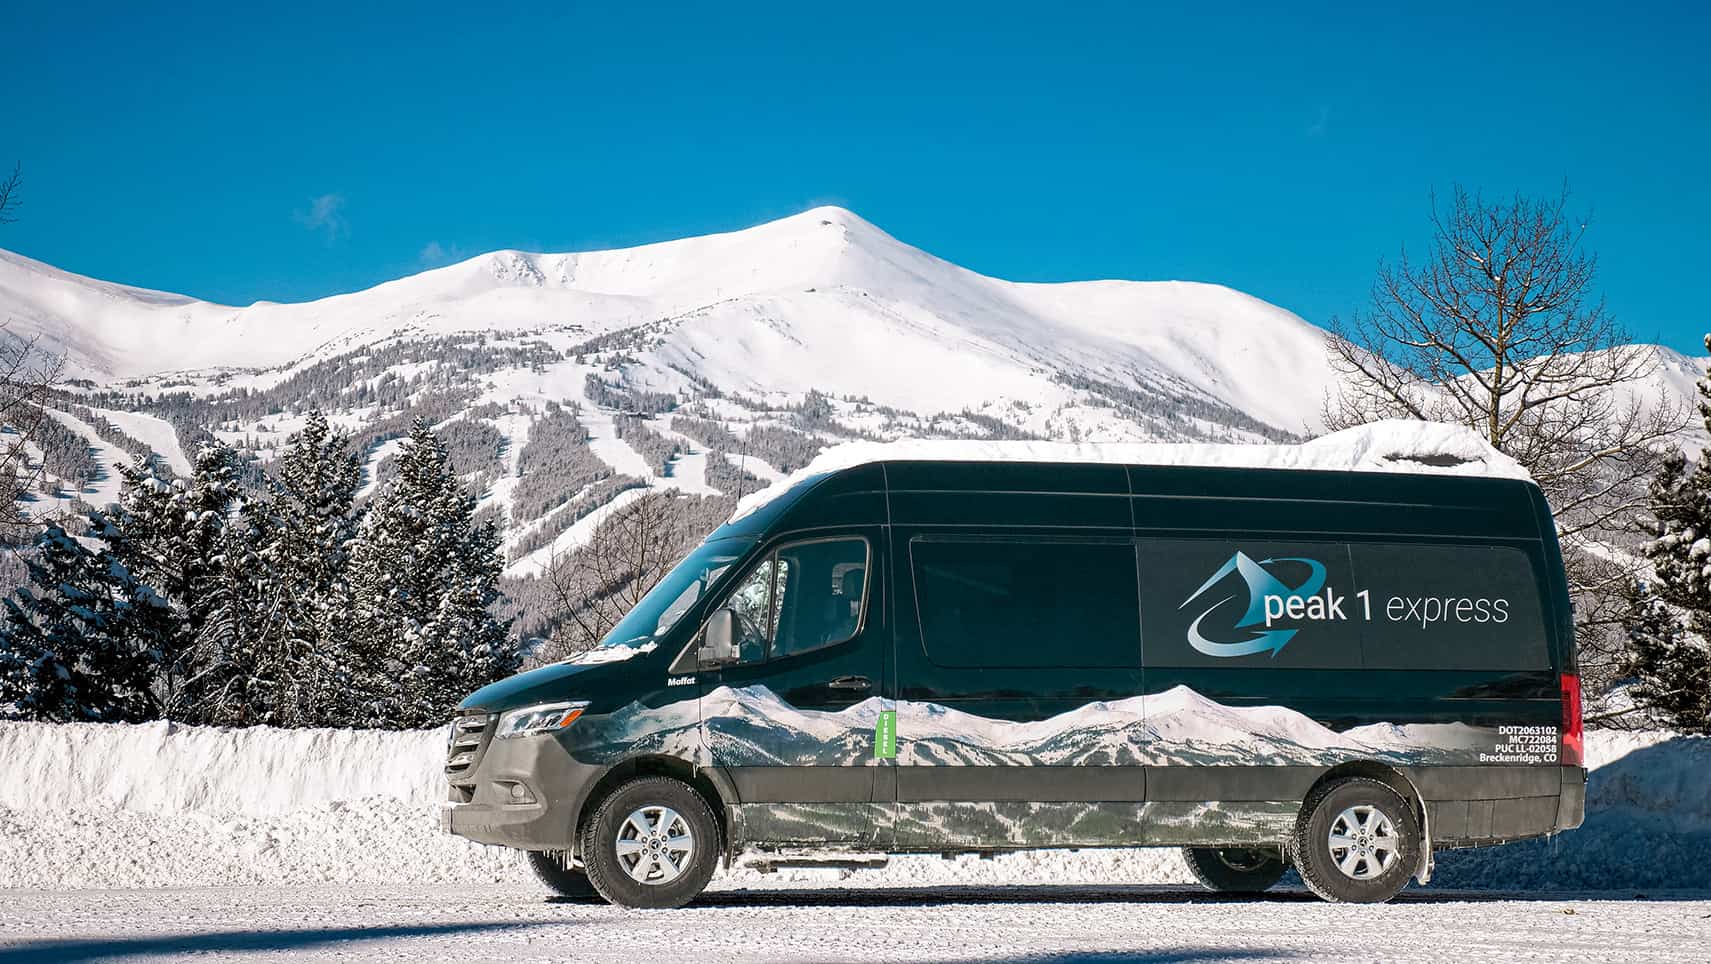 Peak 1 Express van in the Rocky Mountain snow